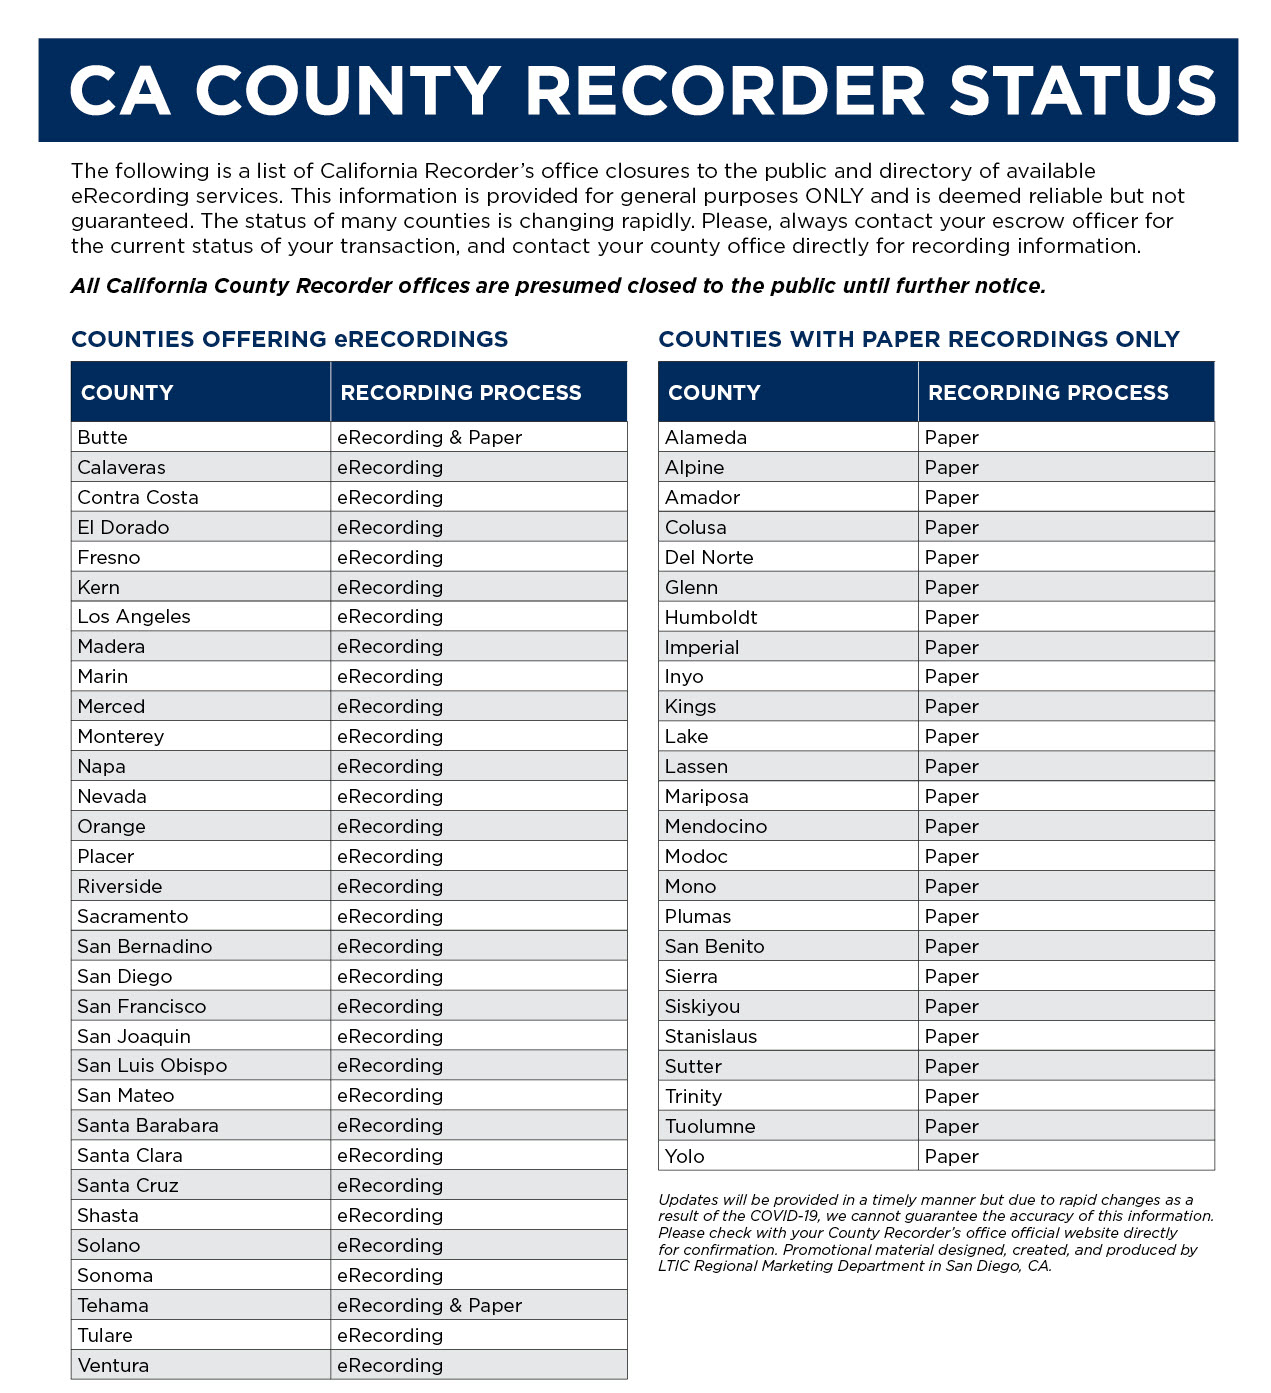 CA-County-Recorder-Status_0331